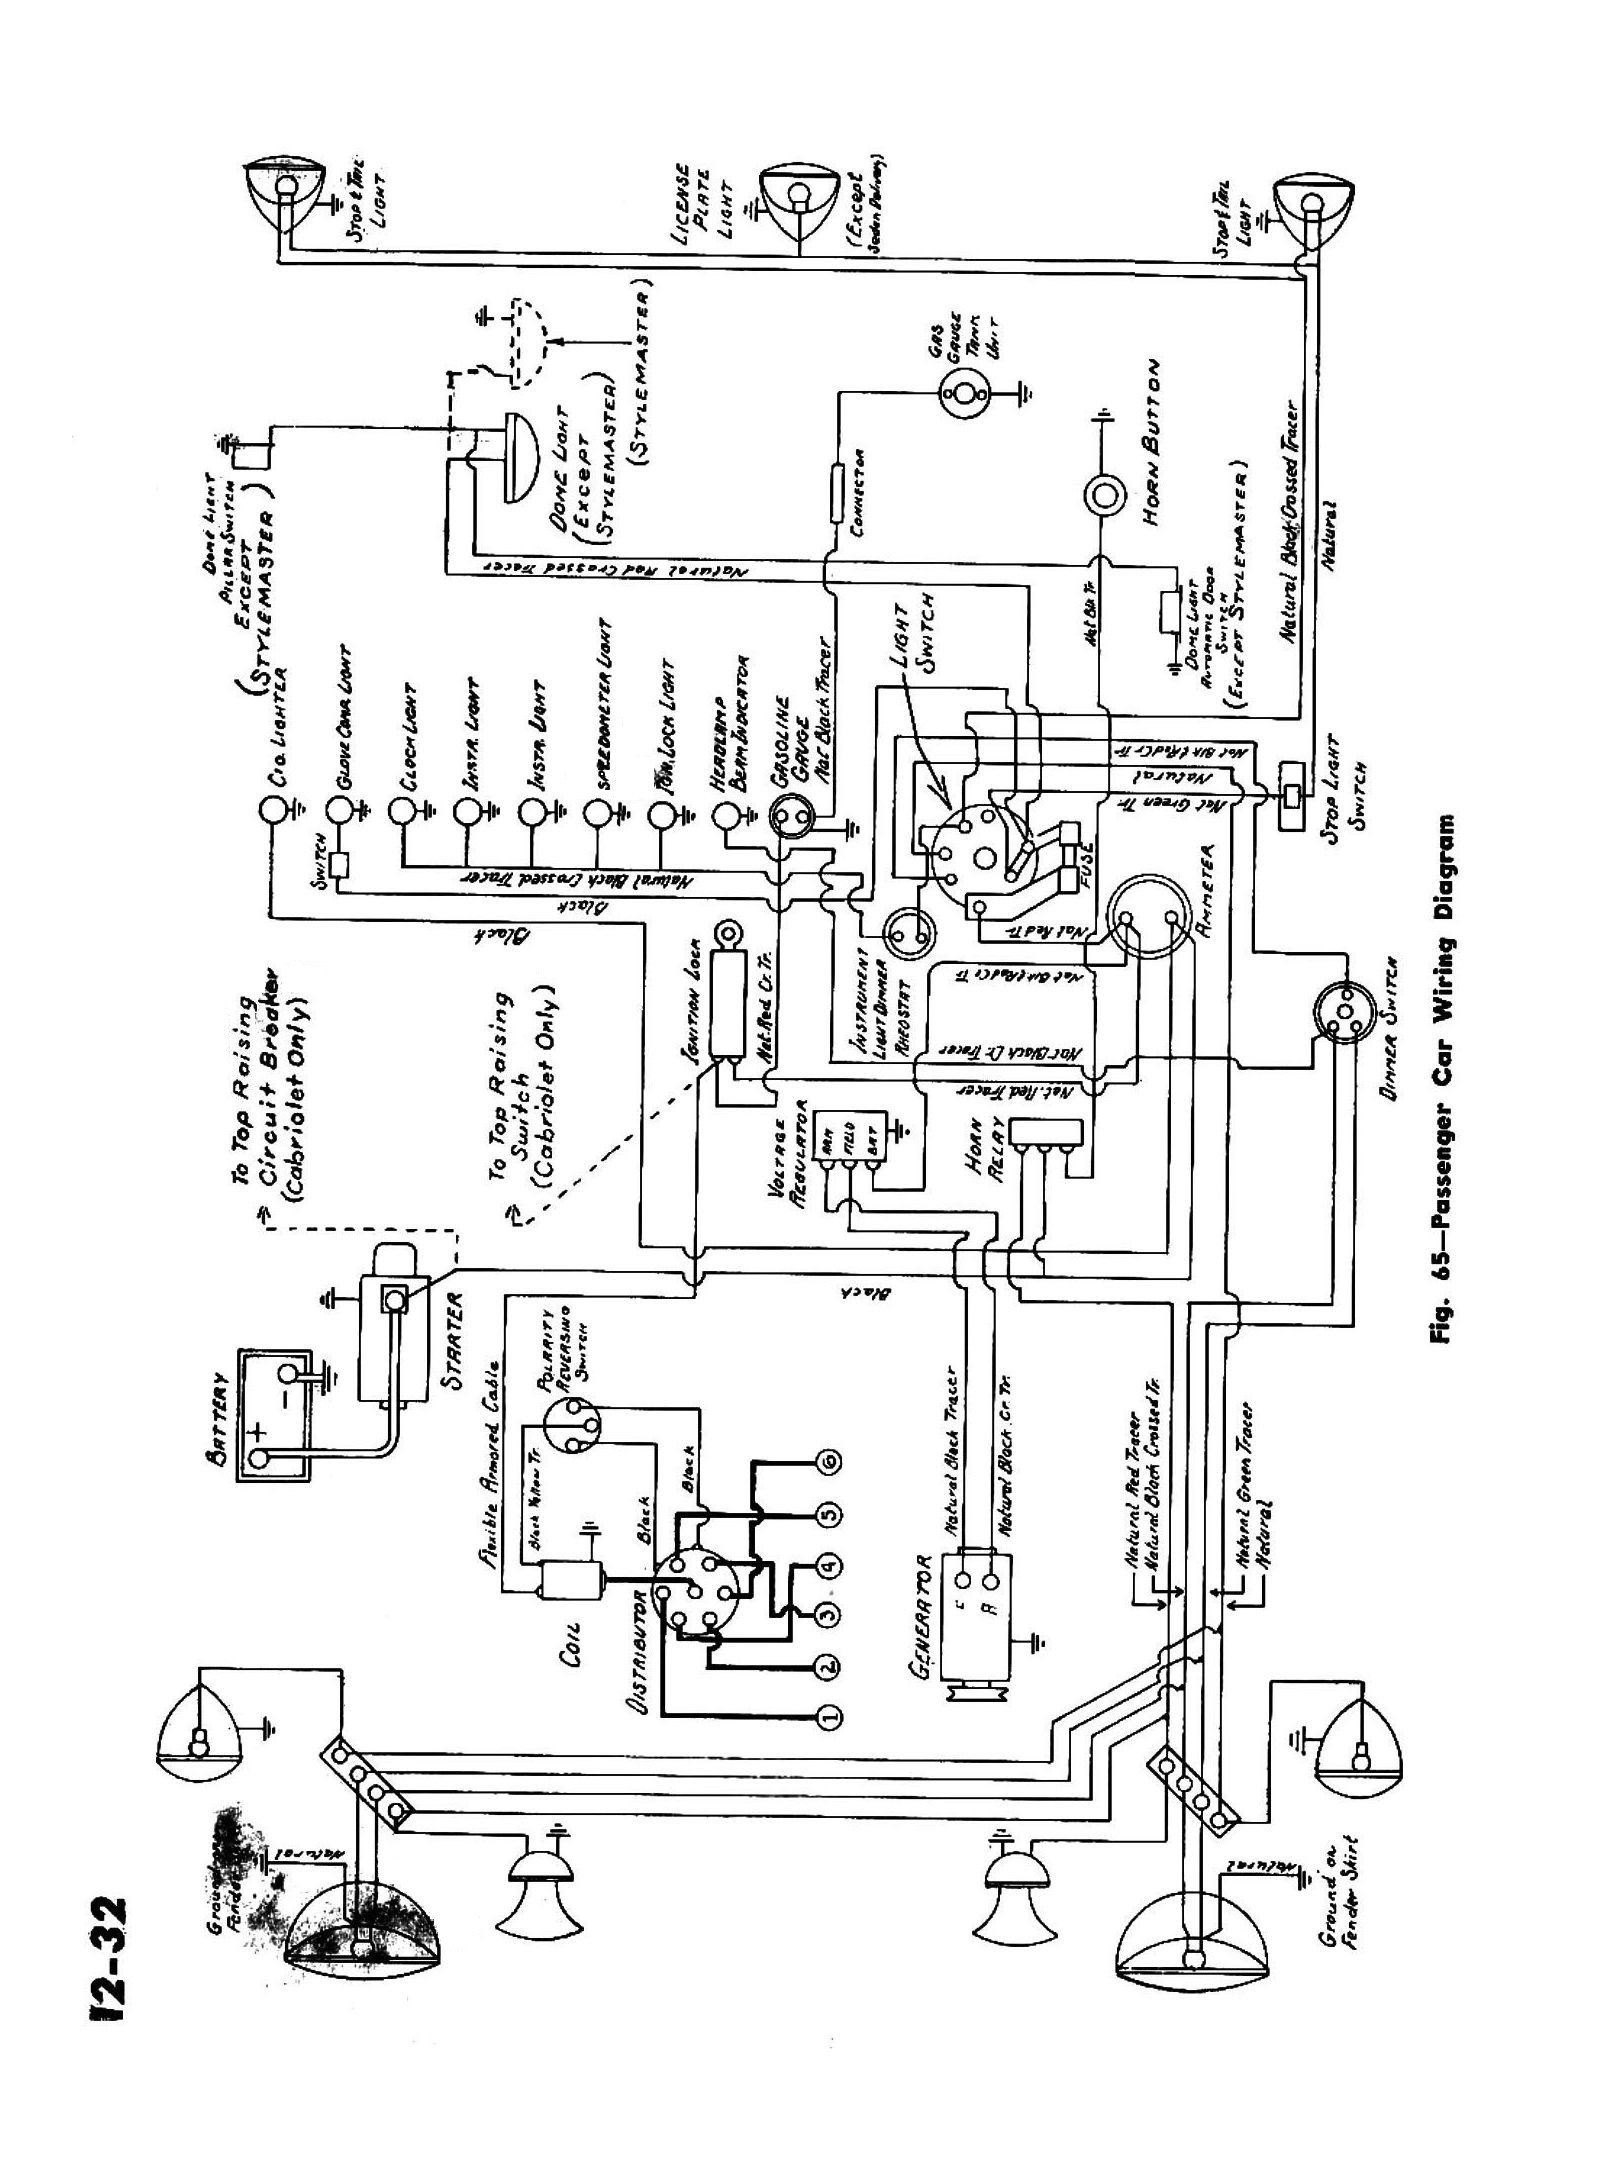 Cars Wiring Diagram | Wiring Diagram - Auto Wiring Diagram